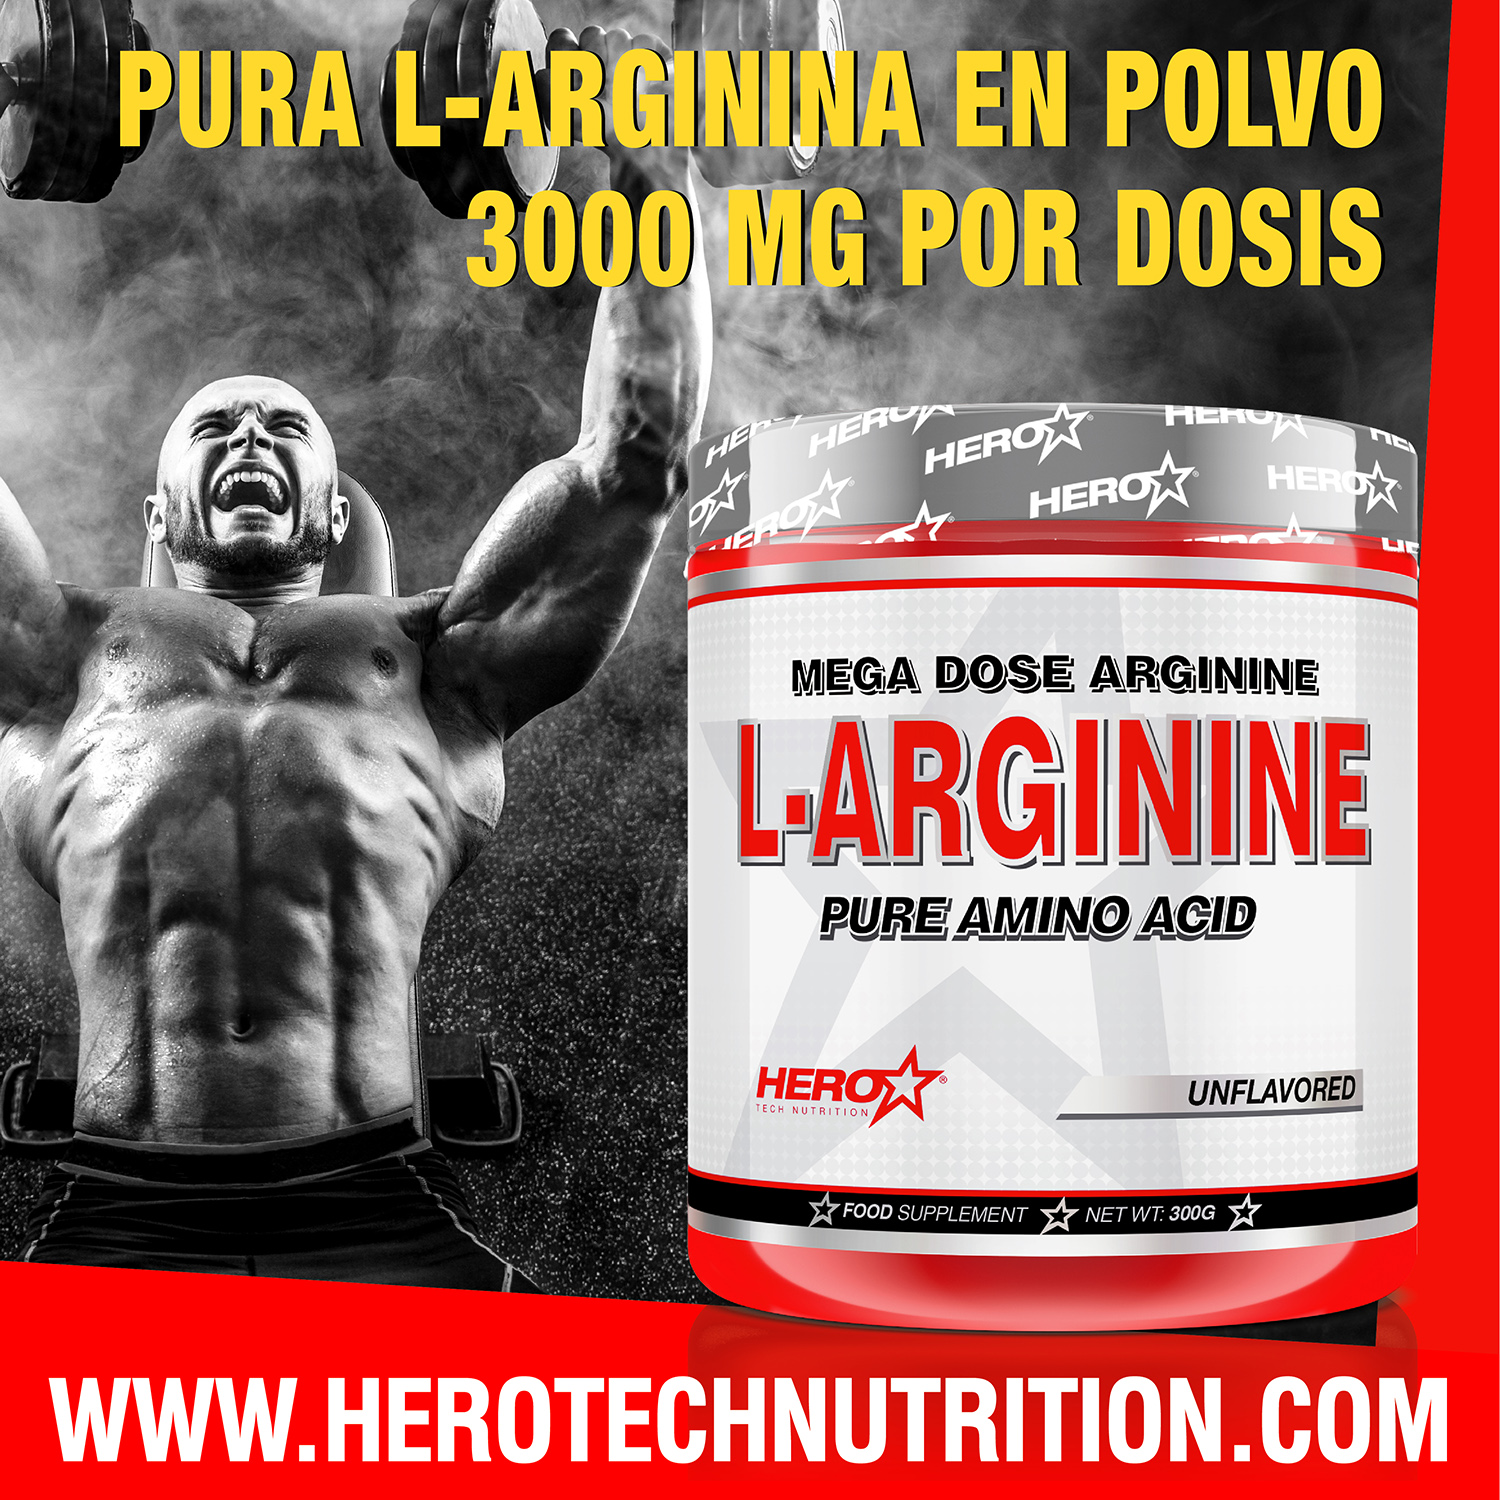 L-ARGININE - ARGININA AMINOACIDO - HERO TECH NUTRITION herotechnutrition